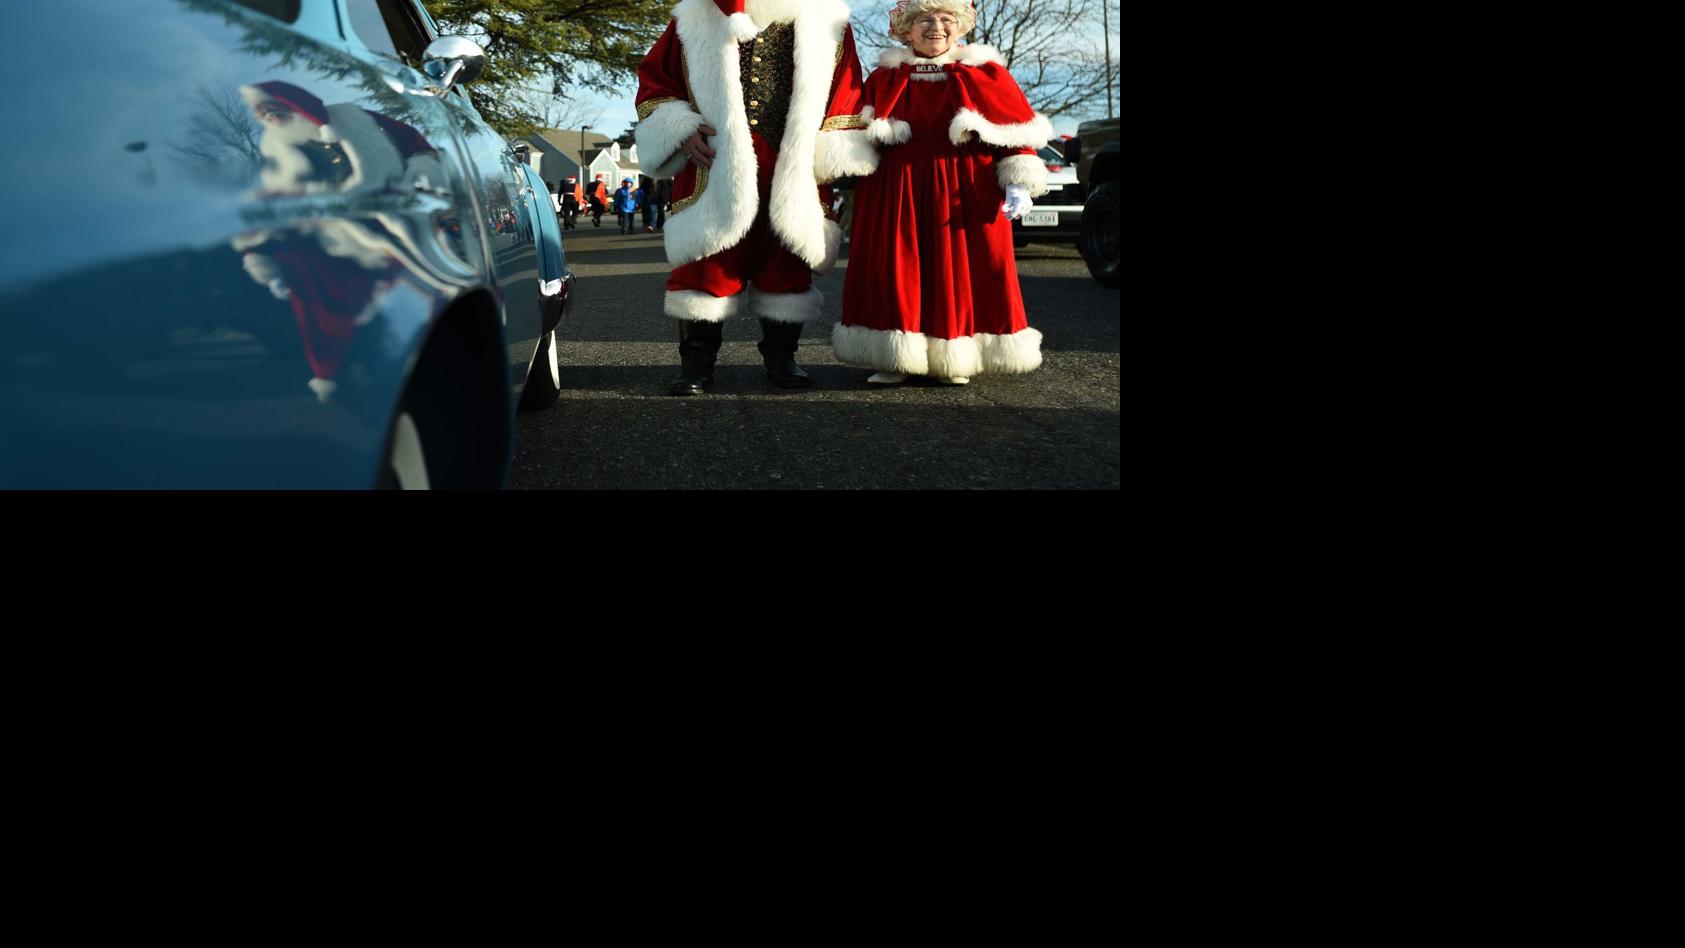 PHOTOS The Lynchburg Christmas Parade Local News